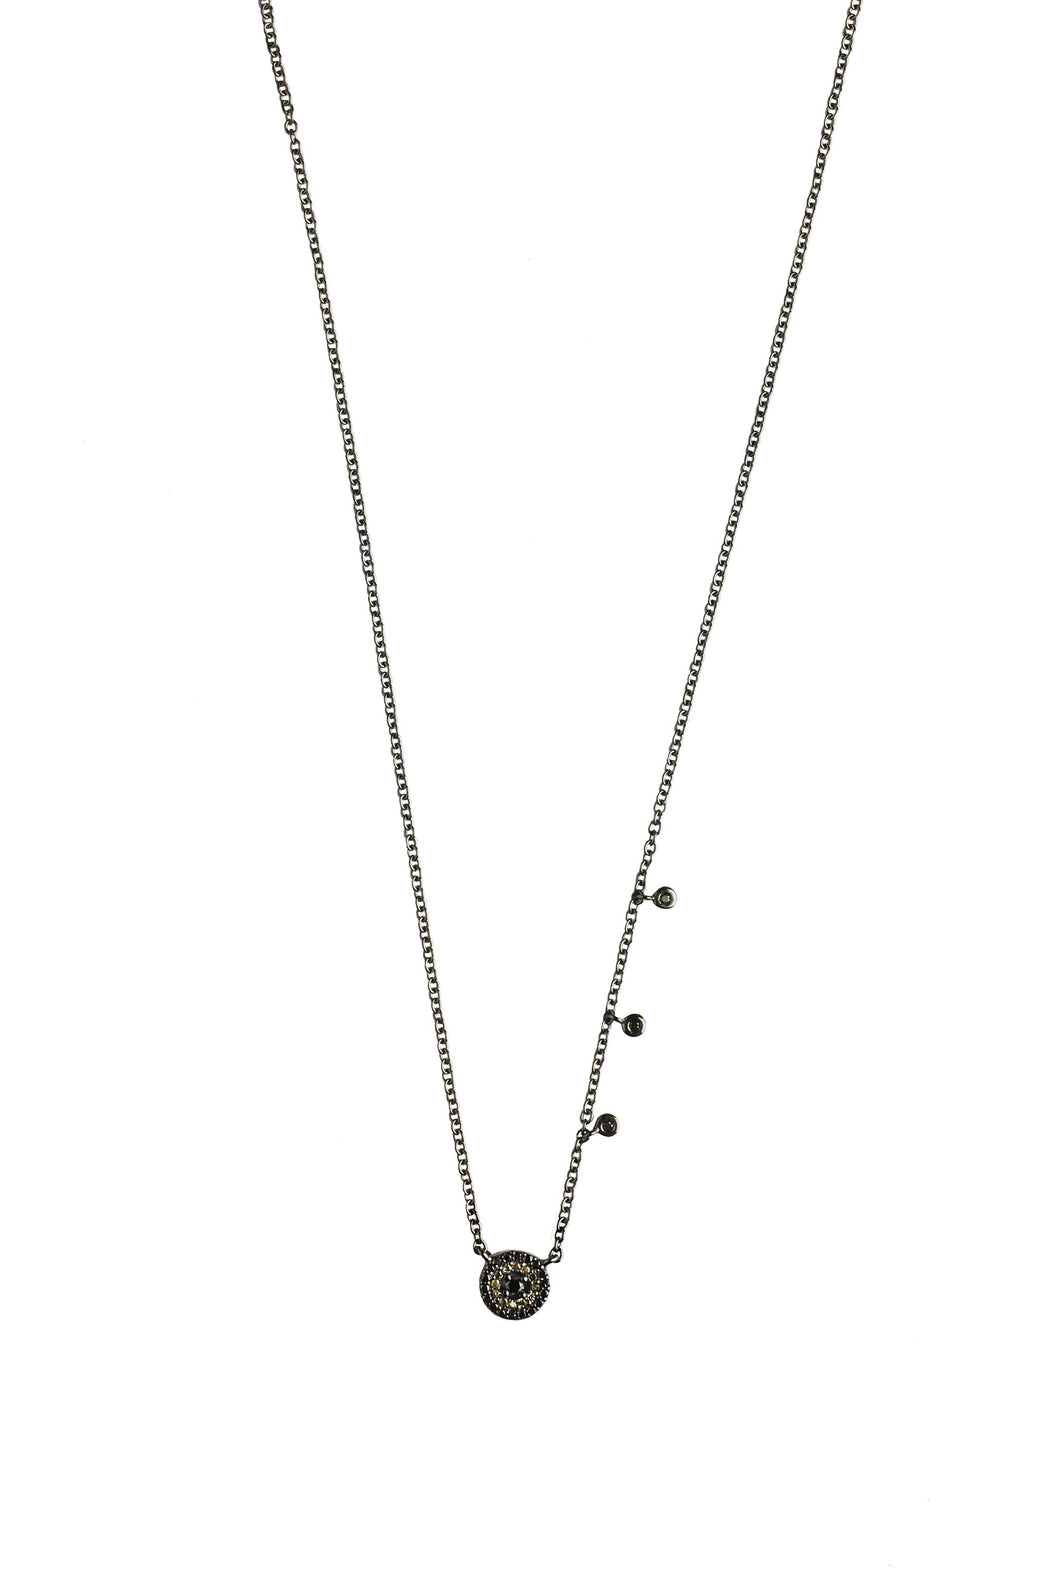 Mini round eye necklace - black gold chain